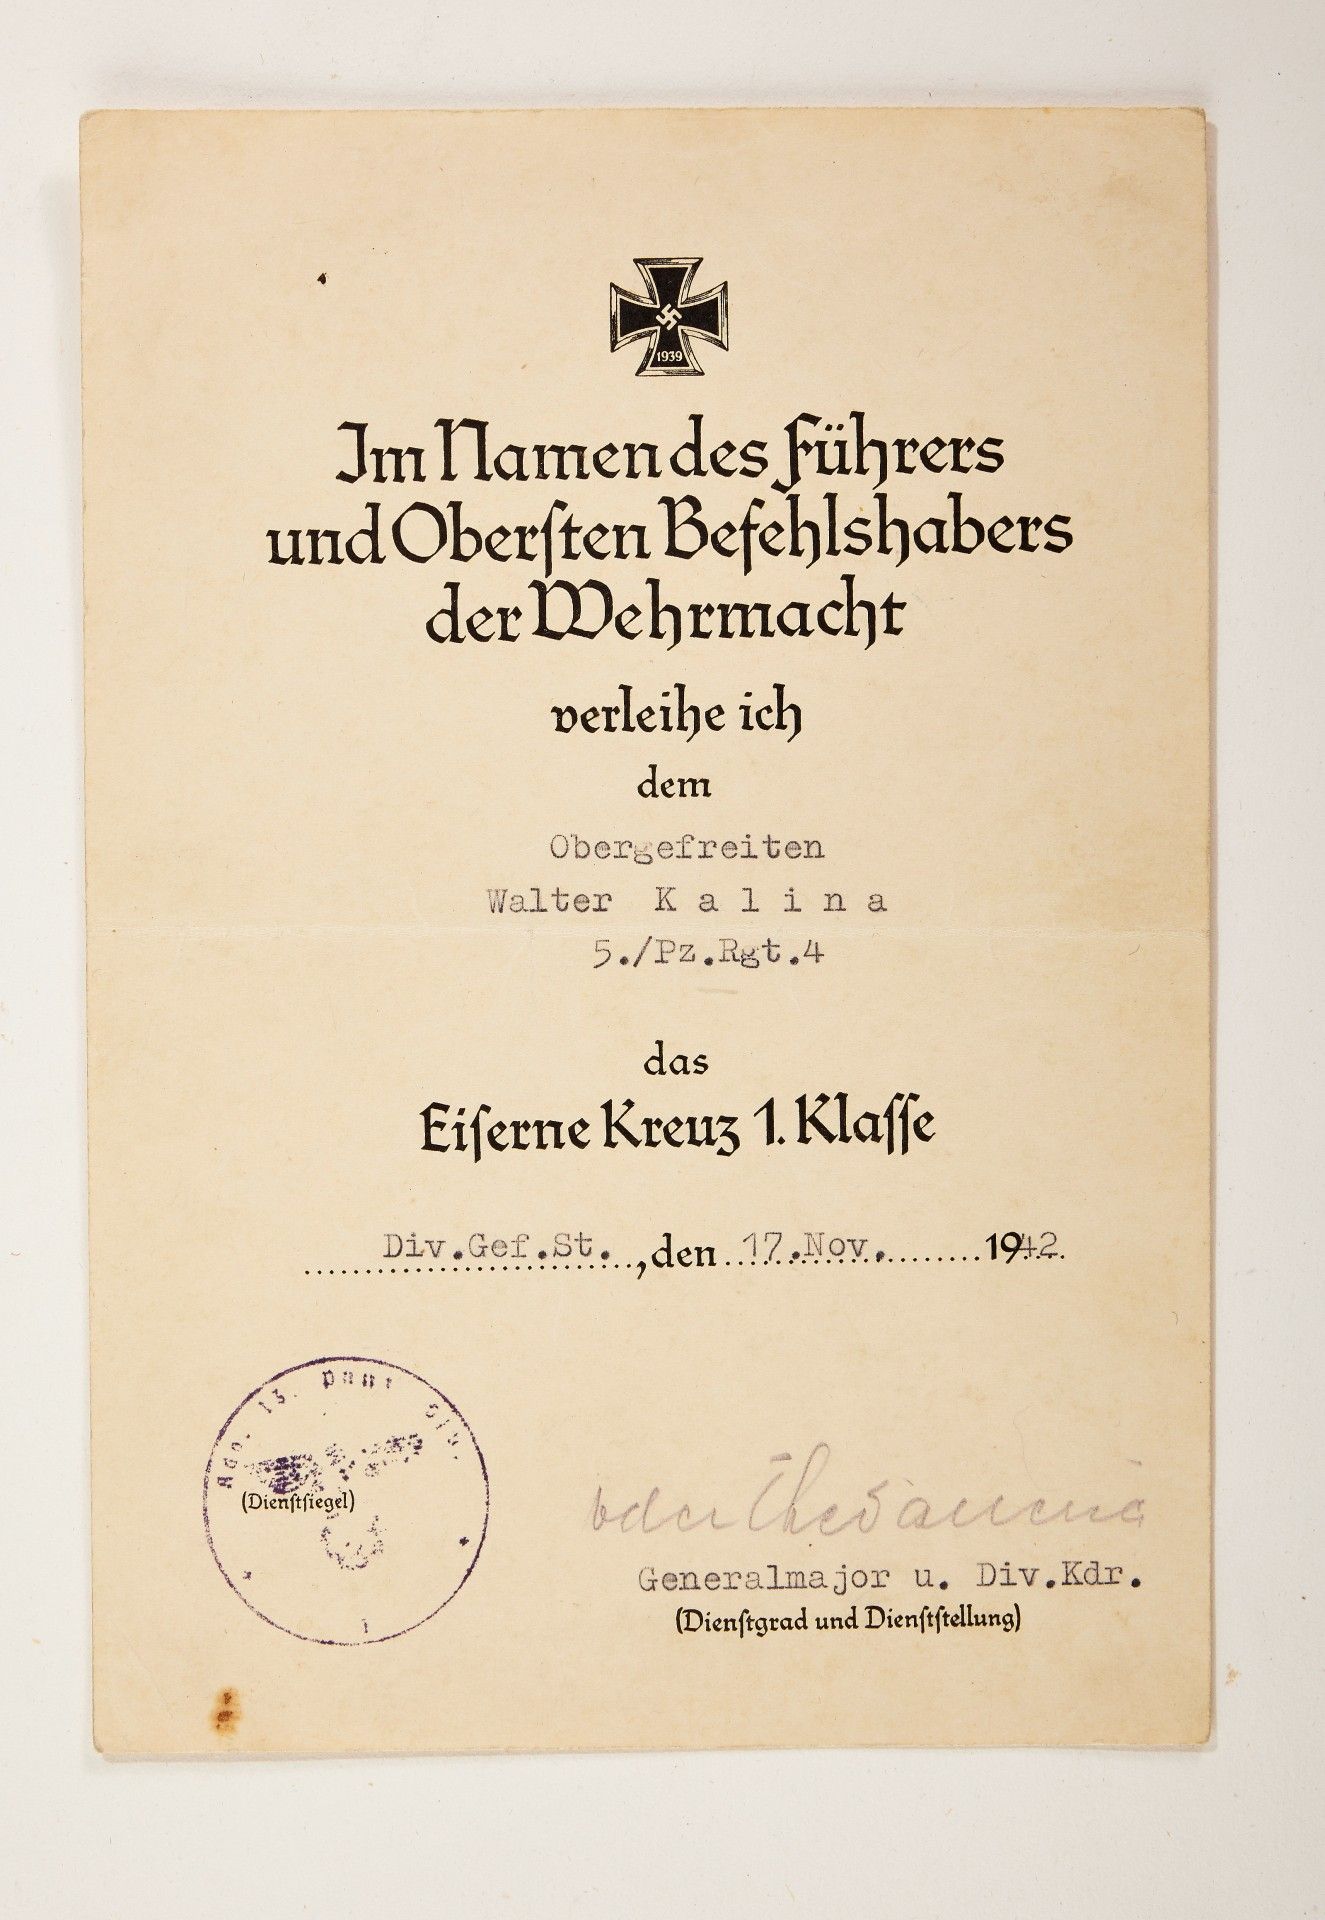 1933-1945: Dokumentennachlass des Unteroffiziers Walter Kalina, 8./Pz.Rgt.4 - Image 3 of 6